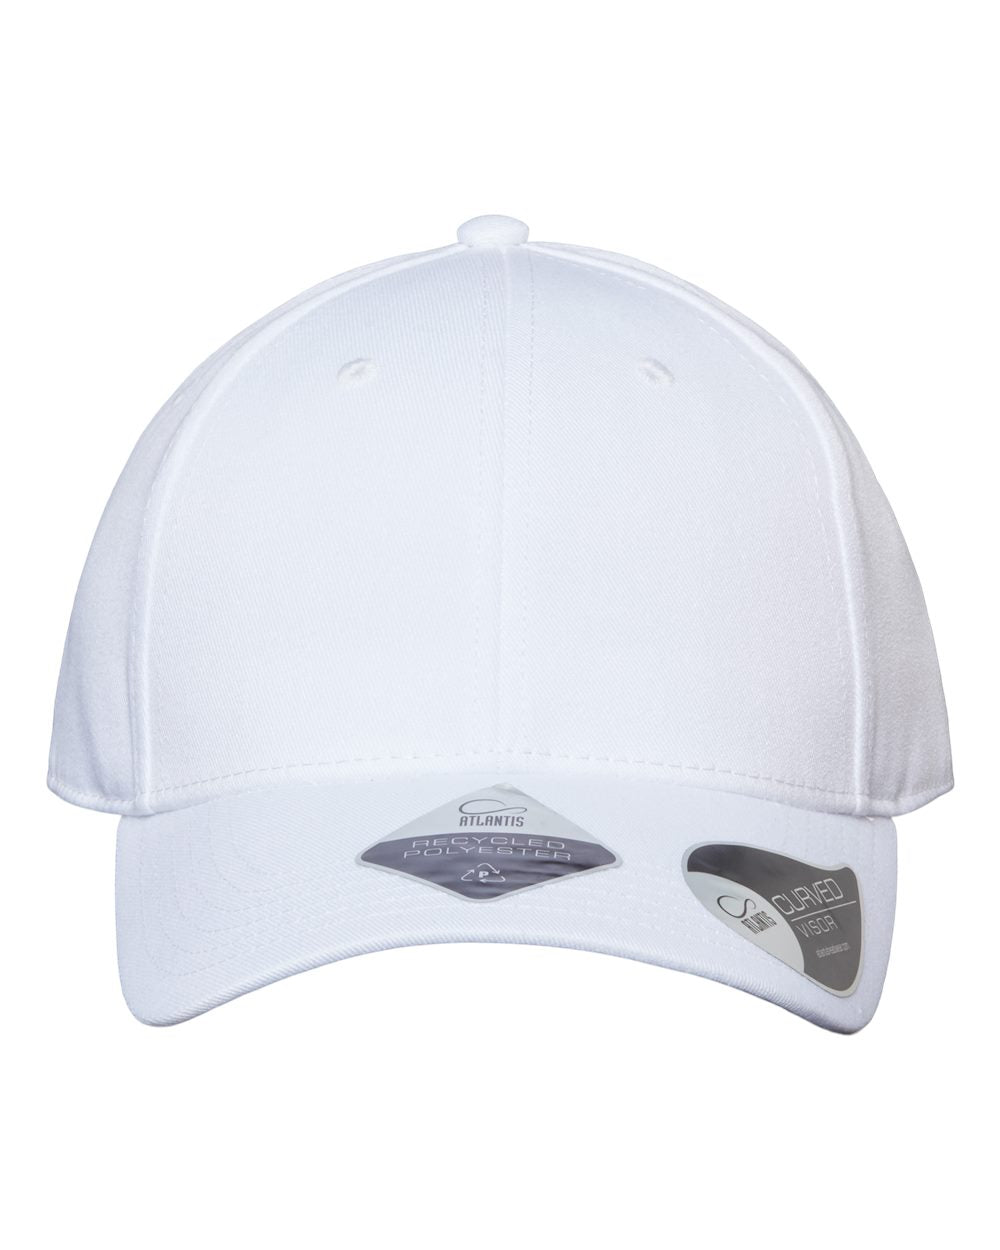 Customizable Atlantis Headwear Structured Joshua Hat in white.